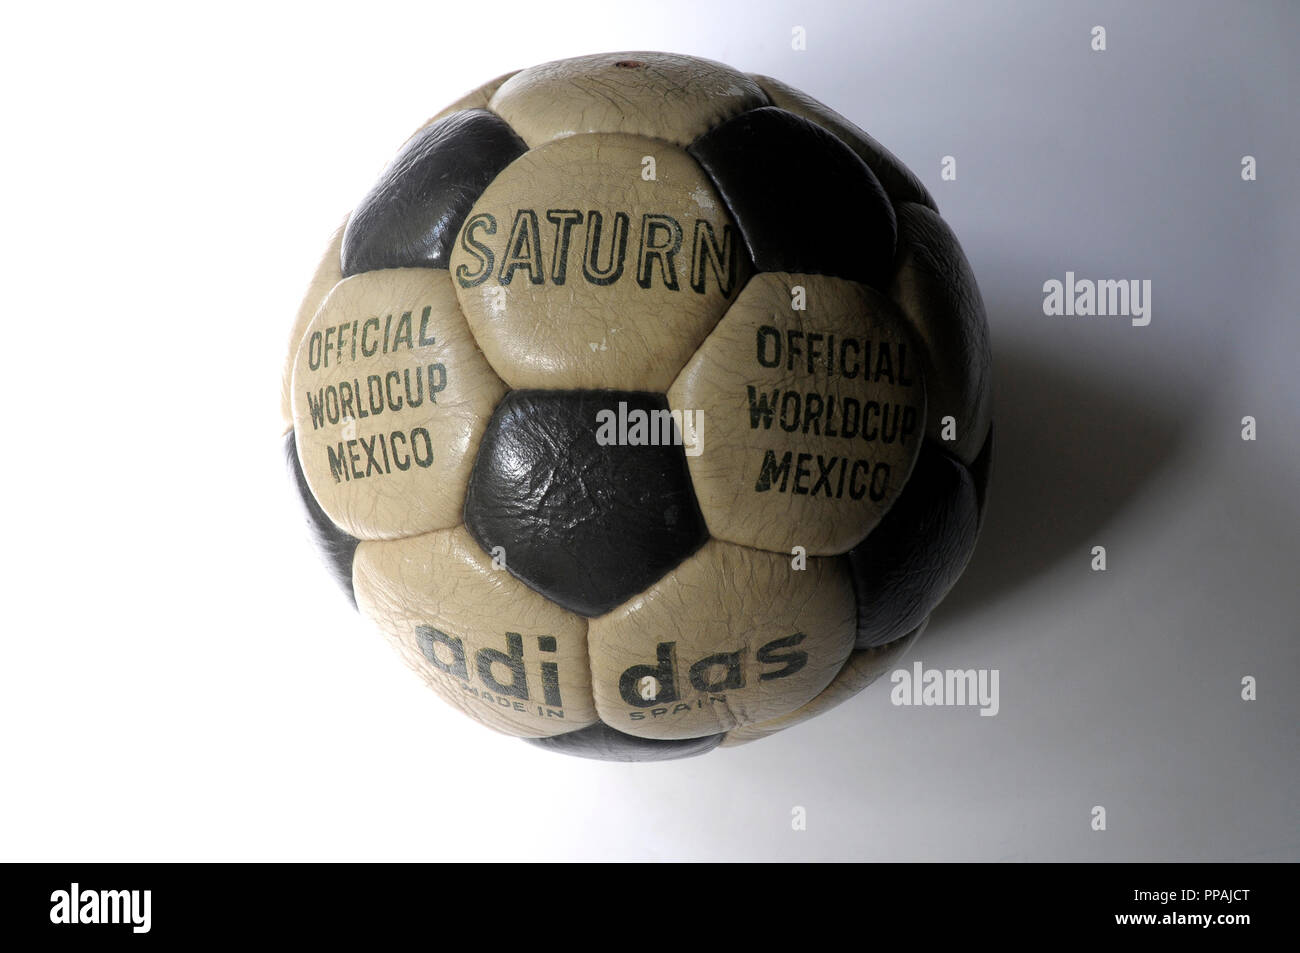 Vintage Leder Fußball Adidas. In Spanien SATURN gemacht, offiziellen WM  Mexiko. Fußball Ballon, Pelota de Futbol Stockfotografie - Alamy